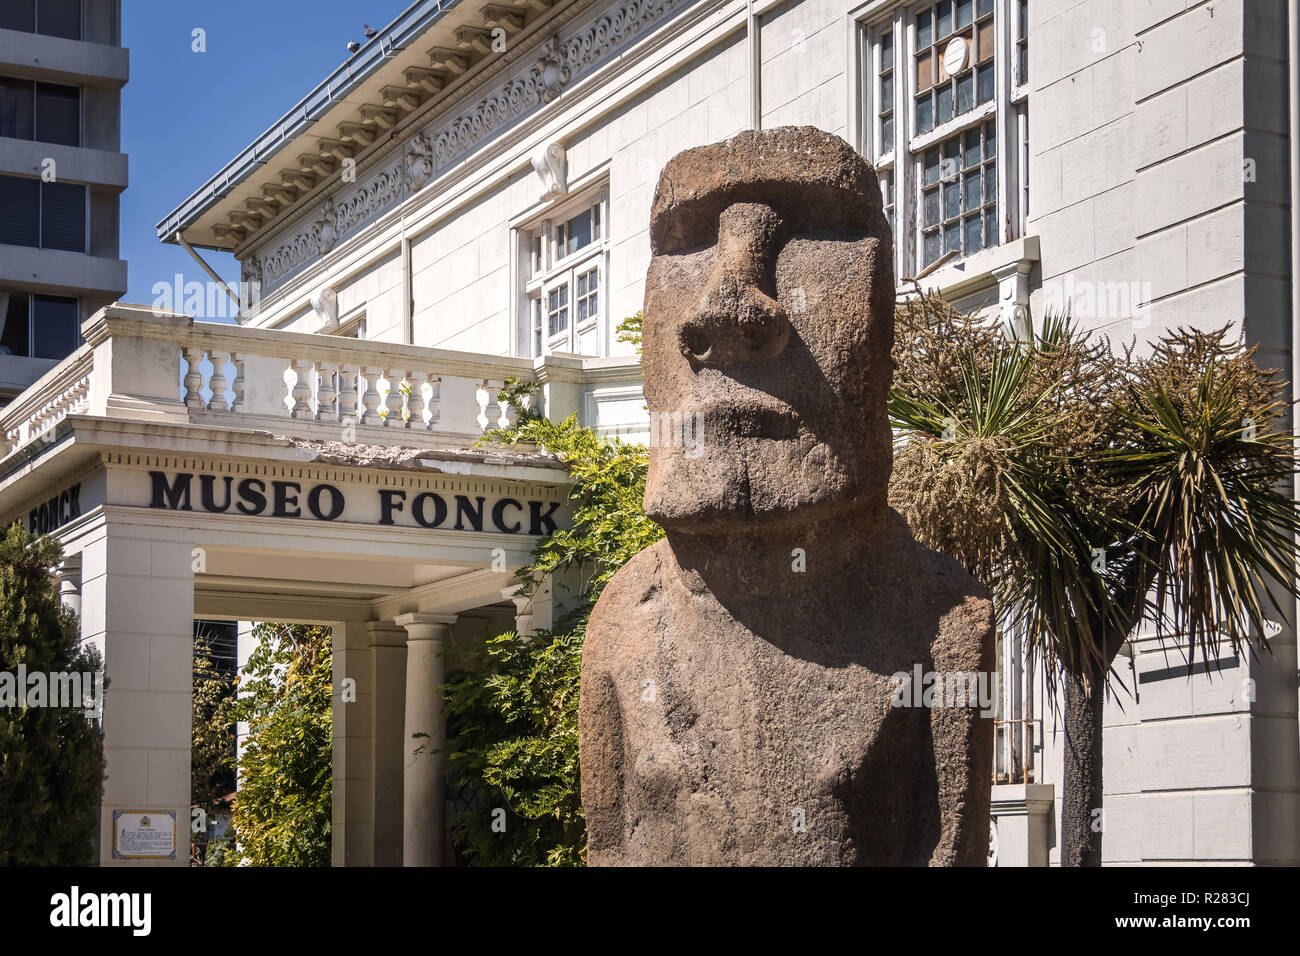 Fonck Museum e Moai statua - Vina del Mar, Cile Foto Stock